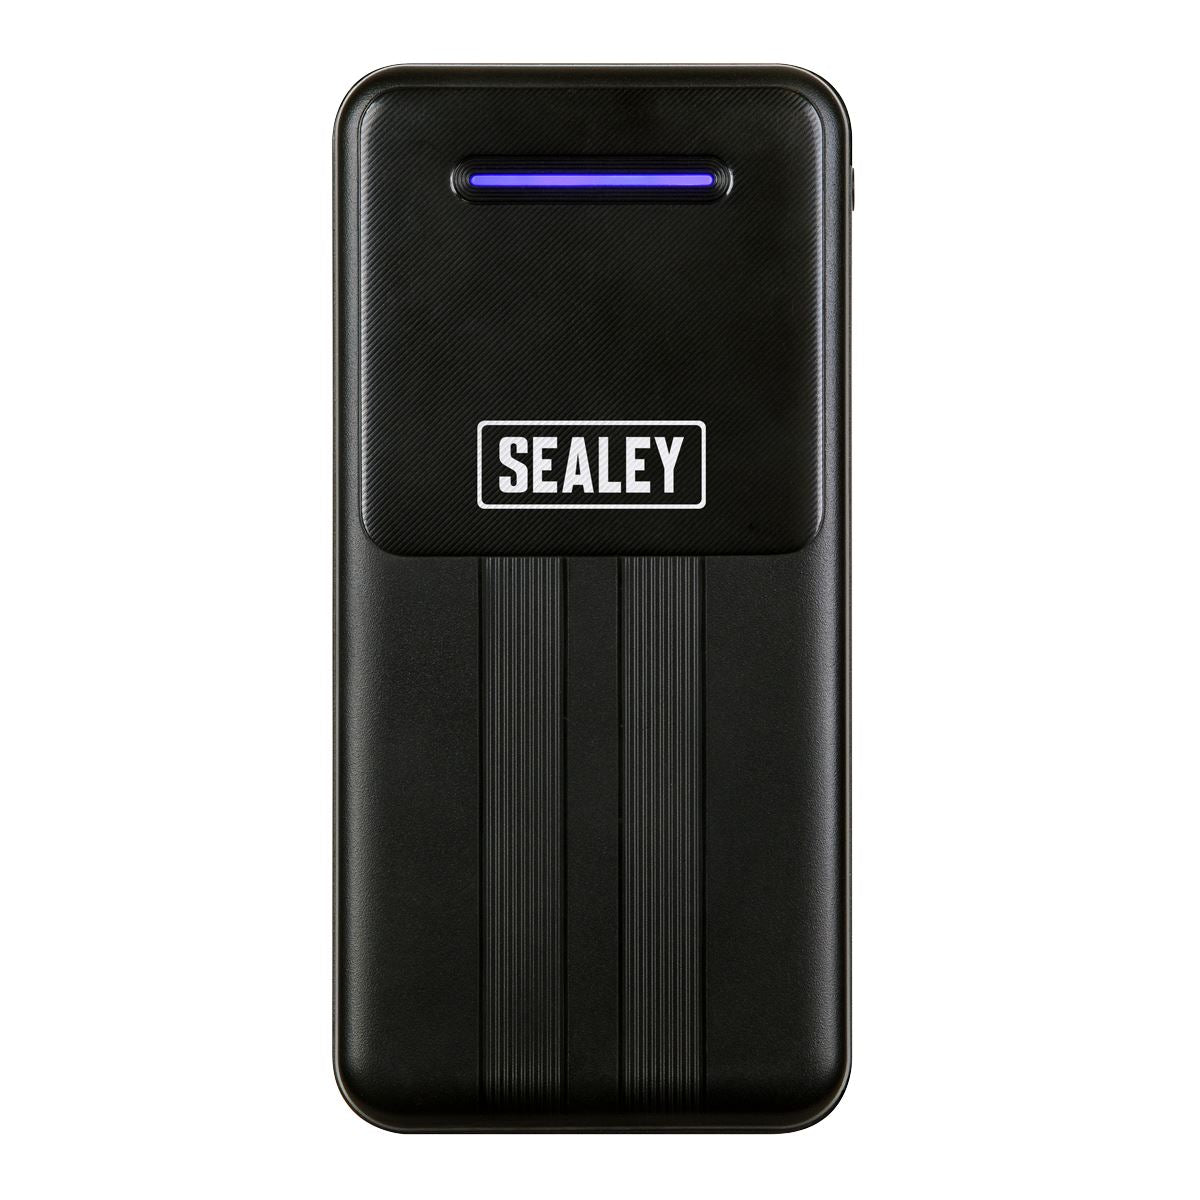 Sealey Portable Power Bank 10W 10000mAh